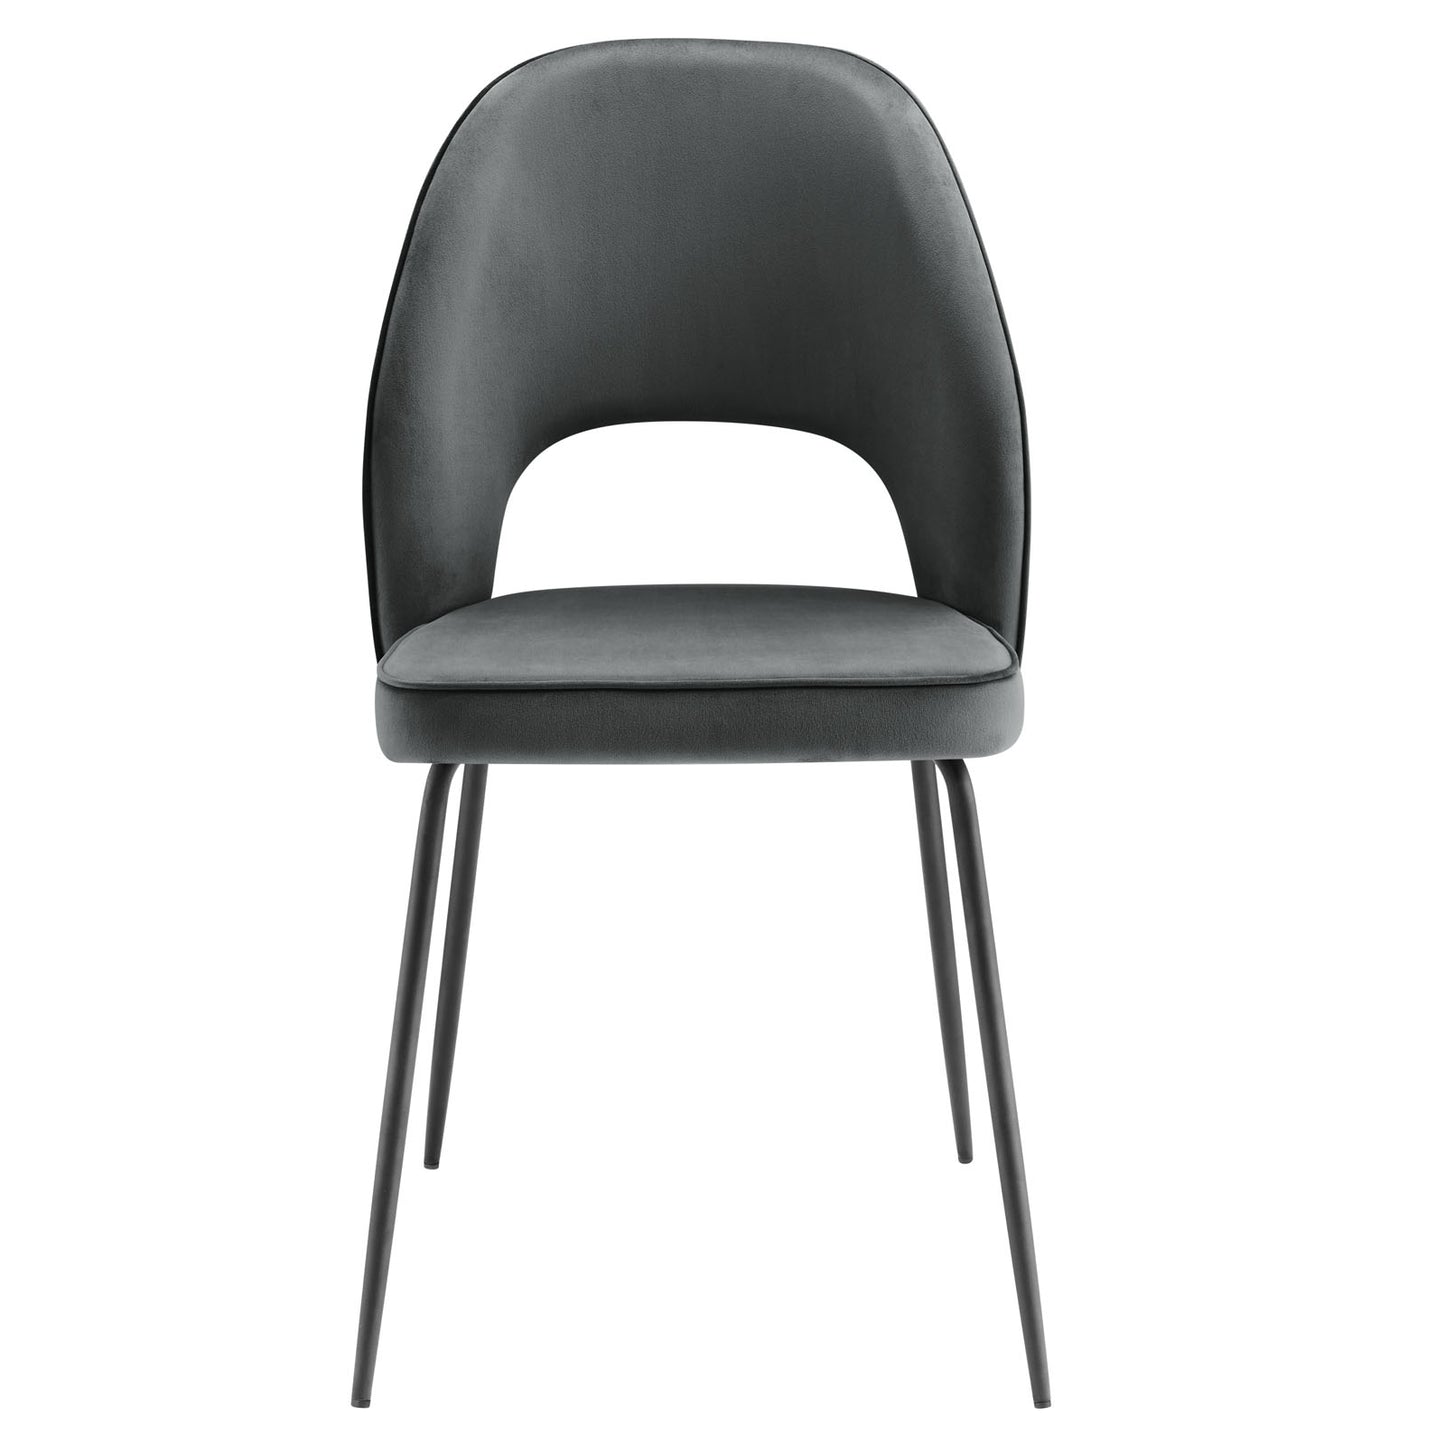 Nico Performance Velvet Dining Chair Set of 2 Black Gray EEI-4673-BLK-GRY